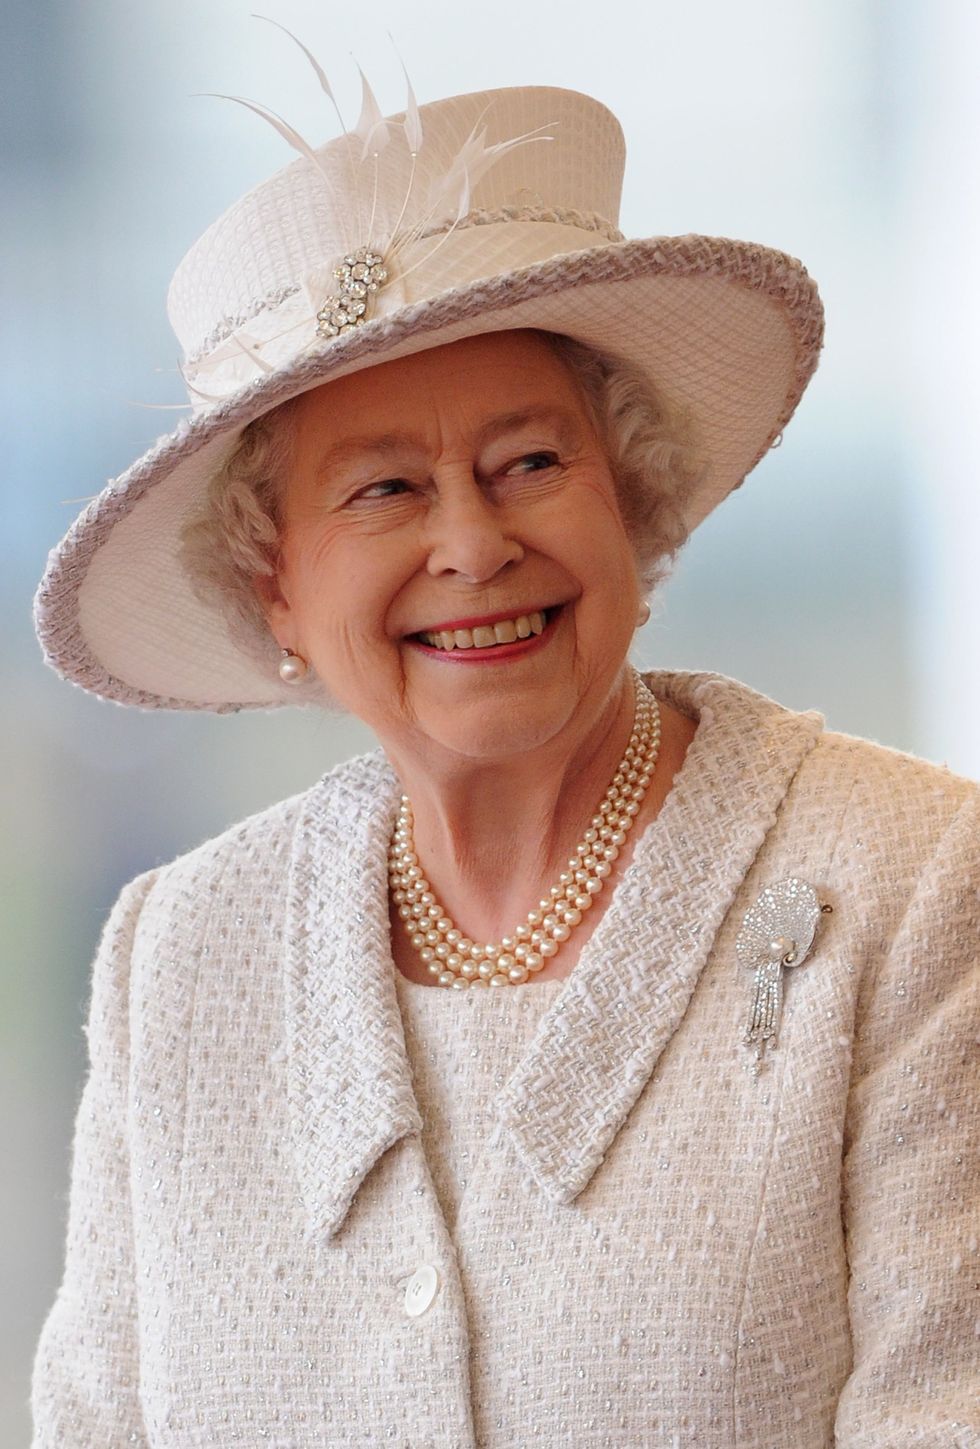 the queen wearing pearls